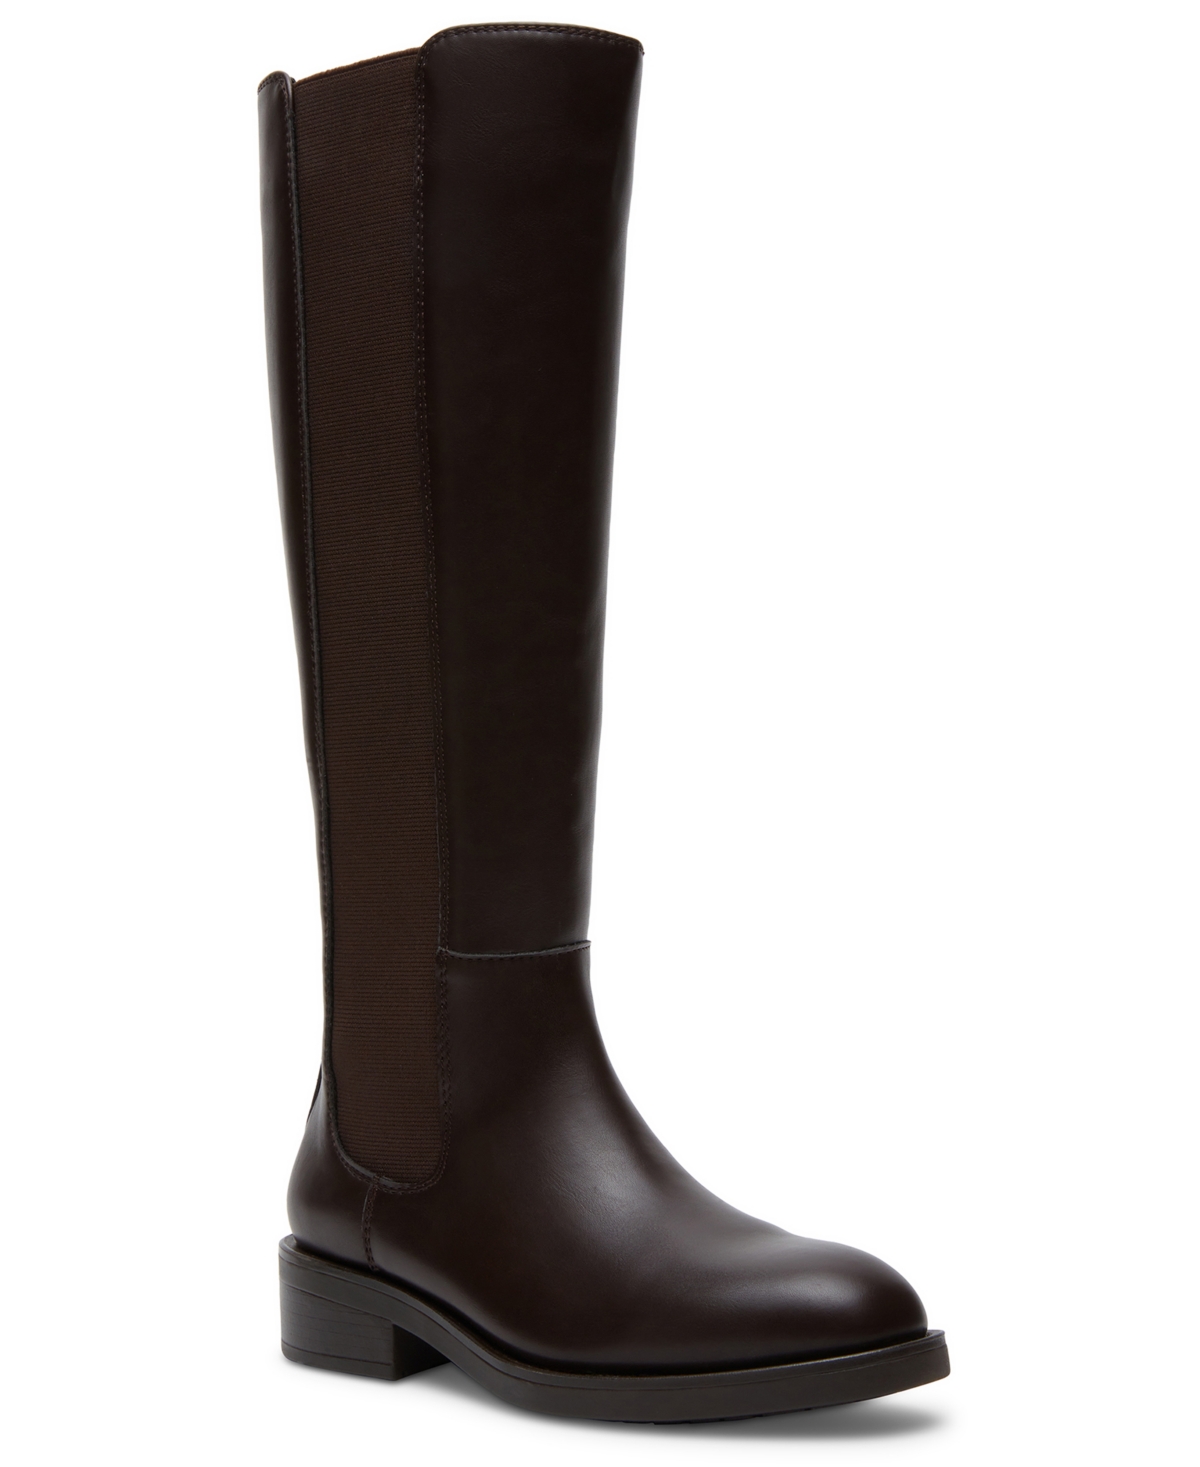 Julip Tall Riding Boots - Dark Brown